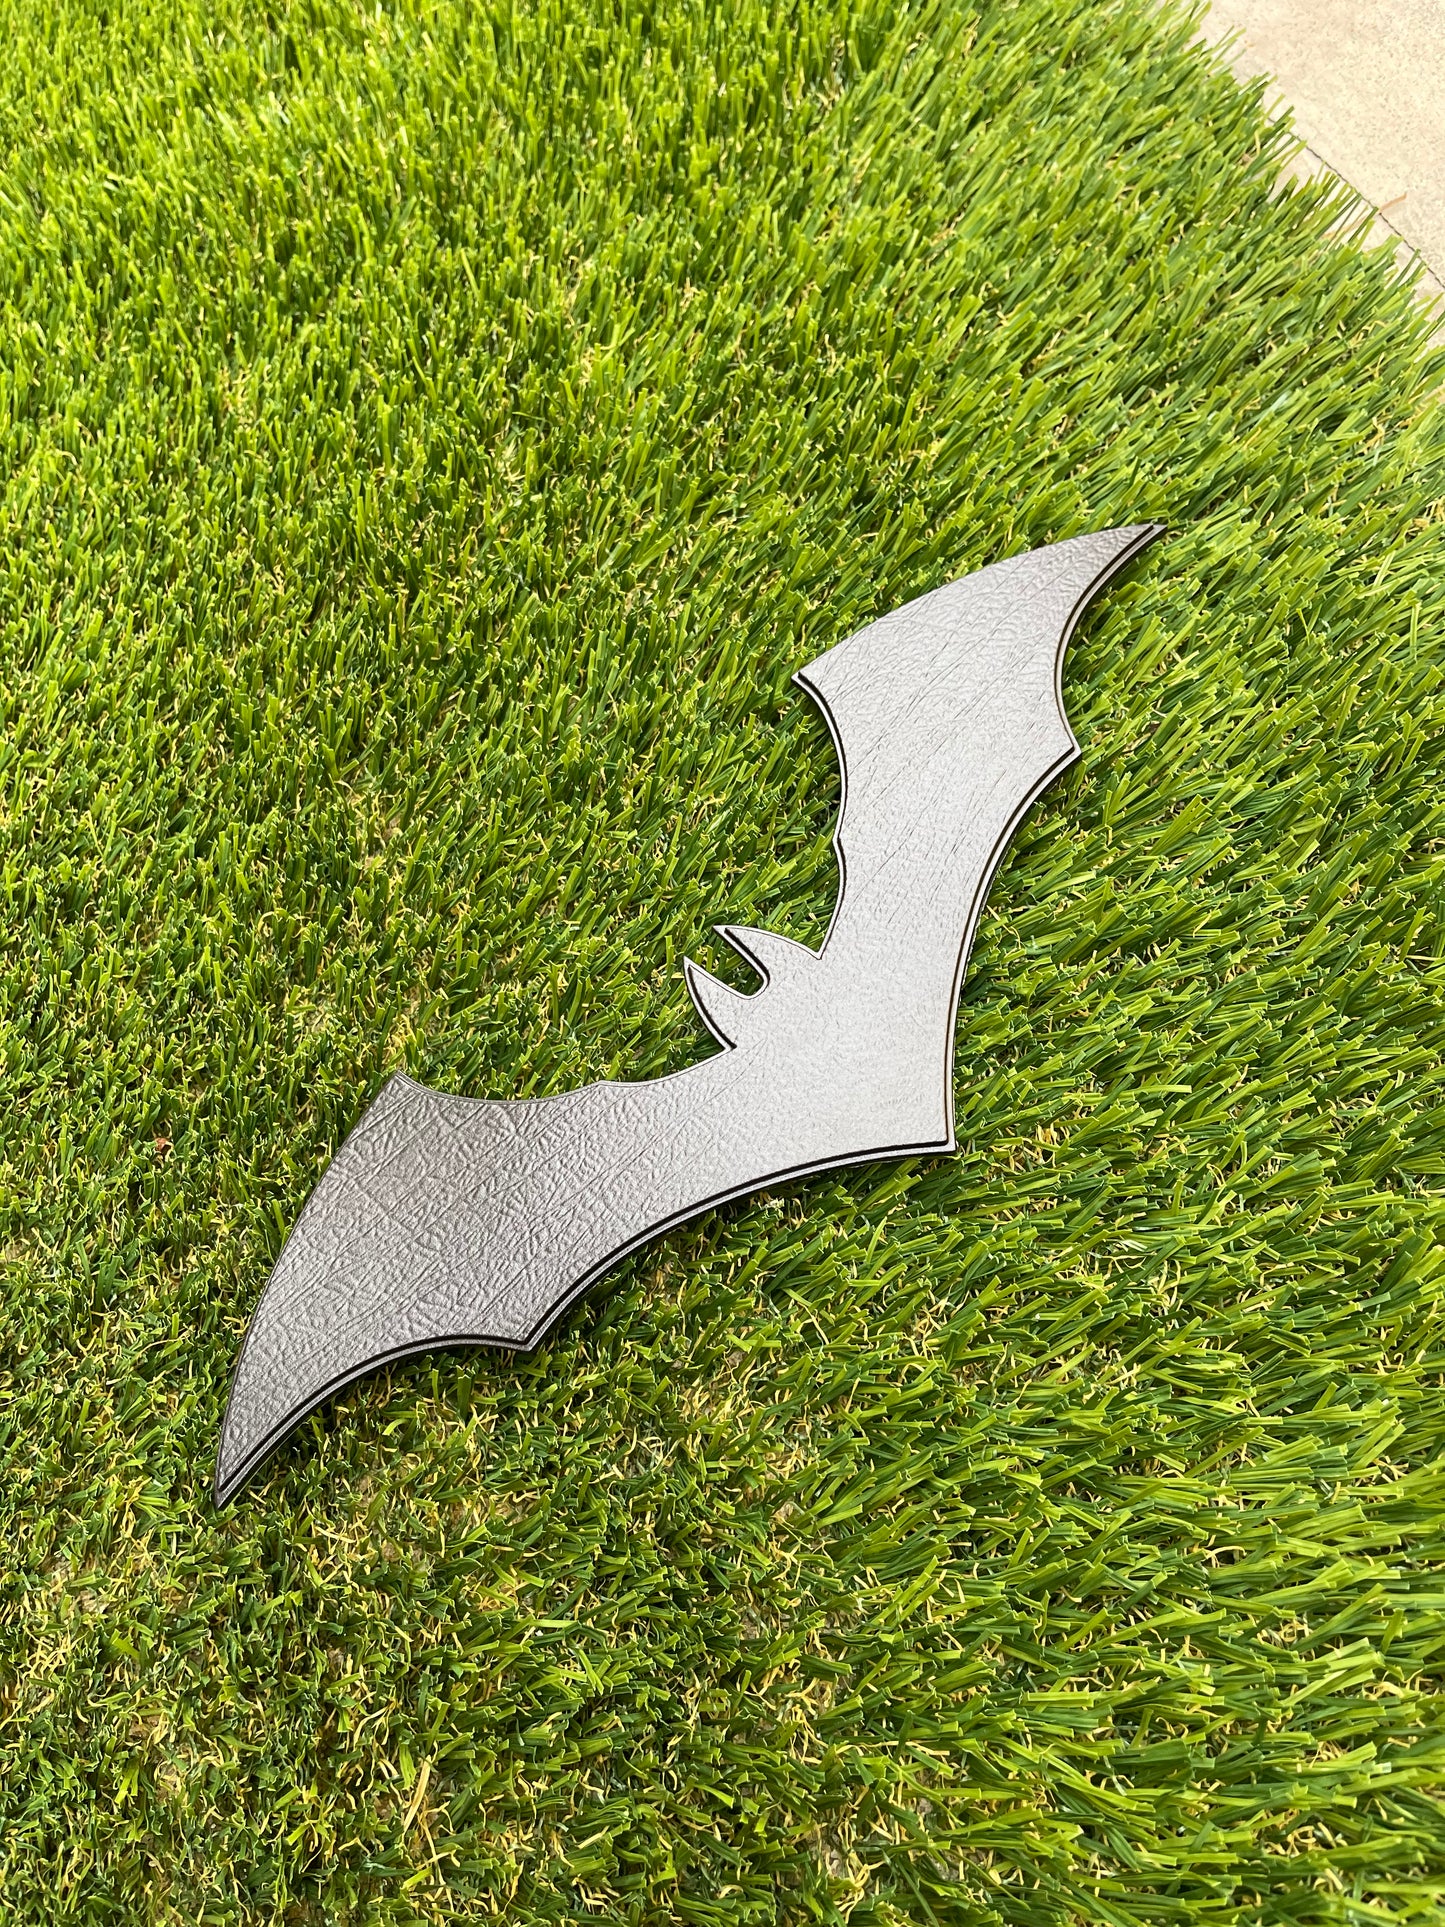 Bat chest emblem - Pattinson variant